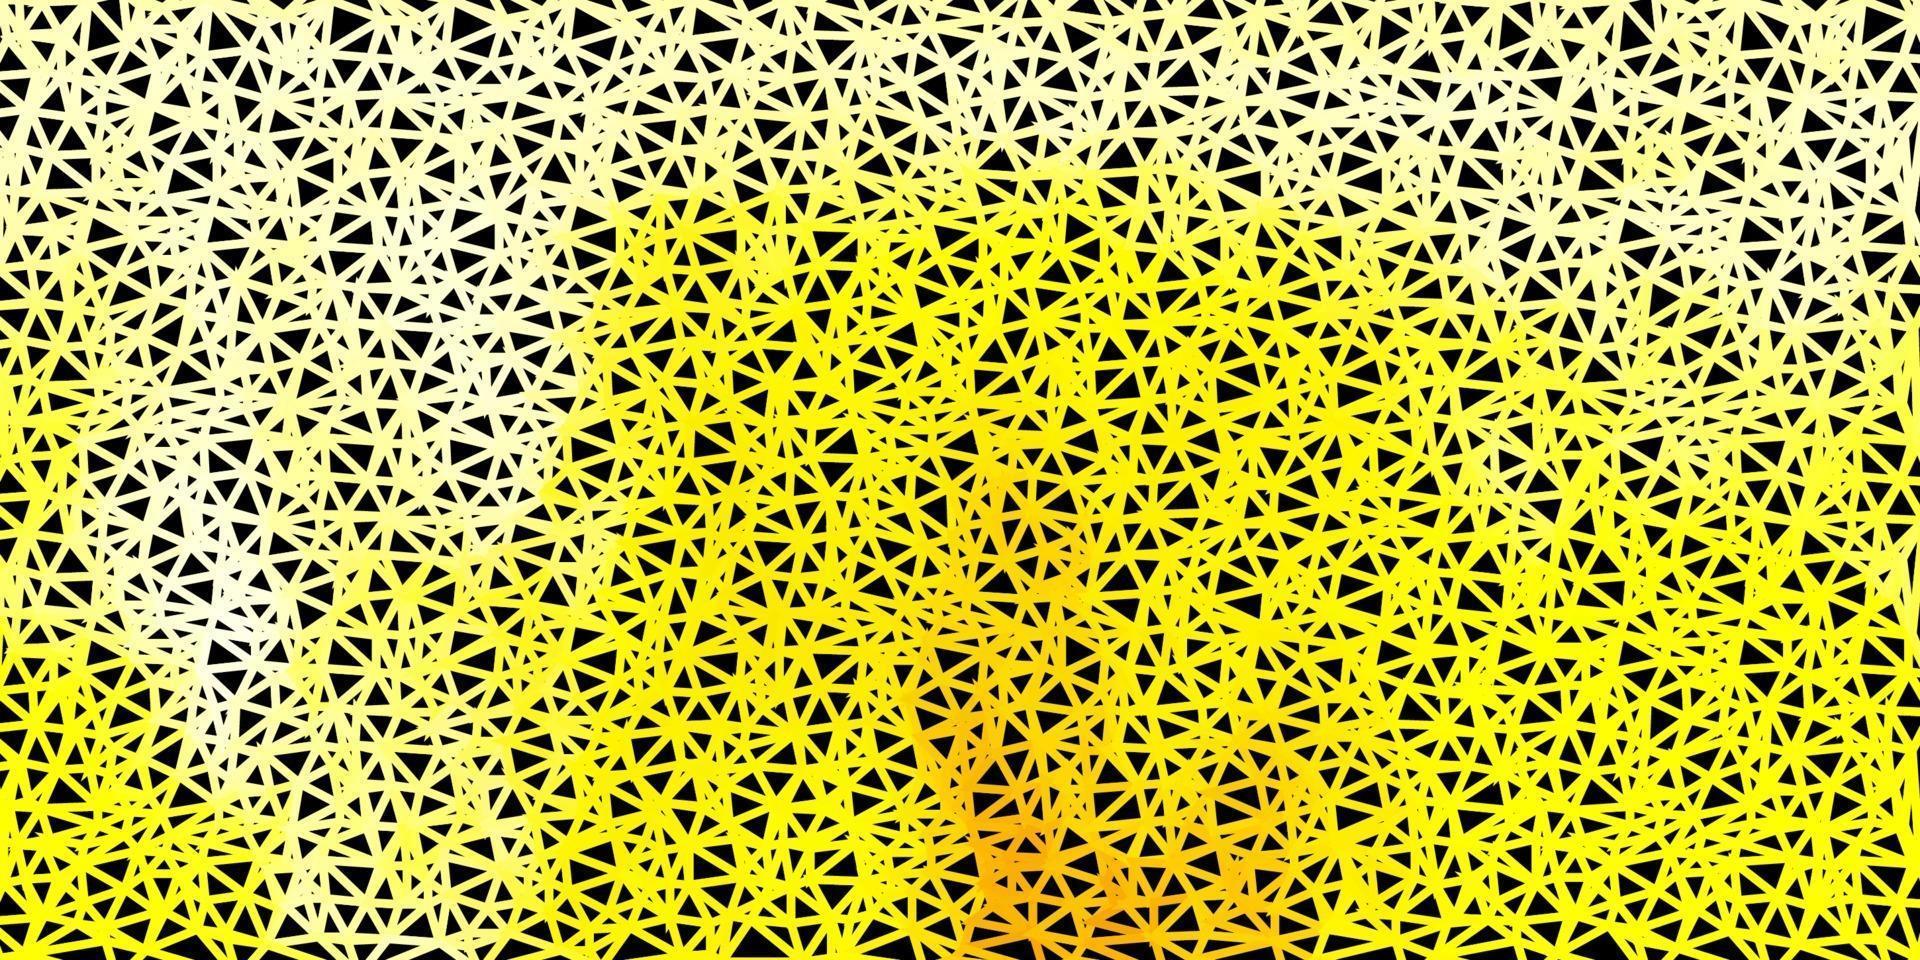 projeto poligonal geométrico do vetor amarelo claro.